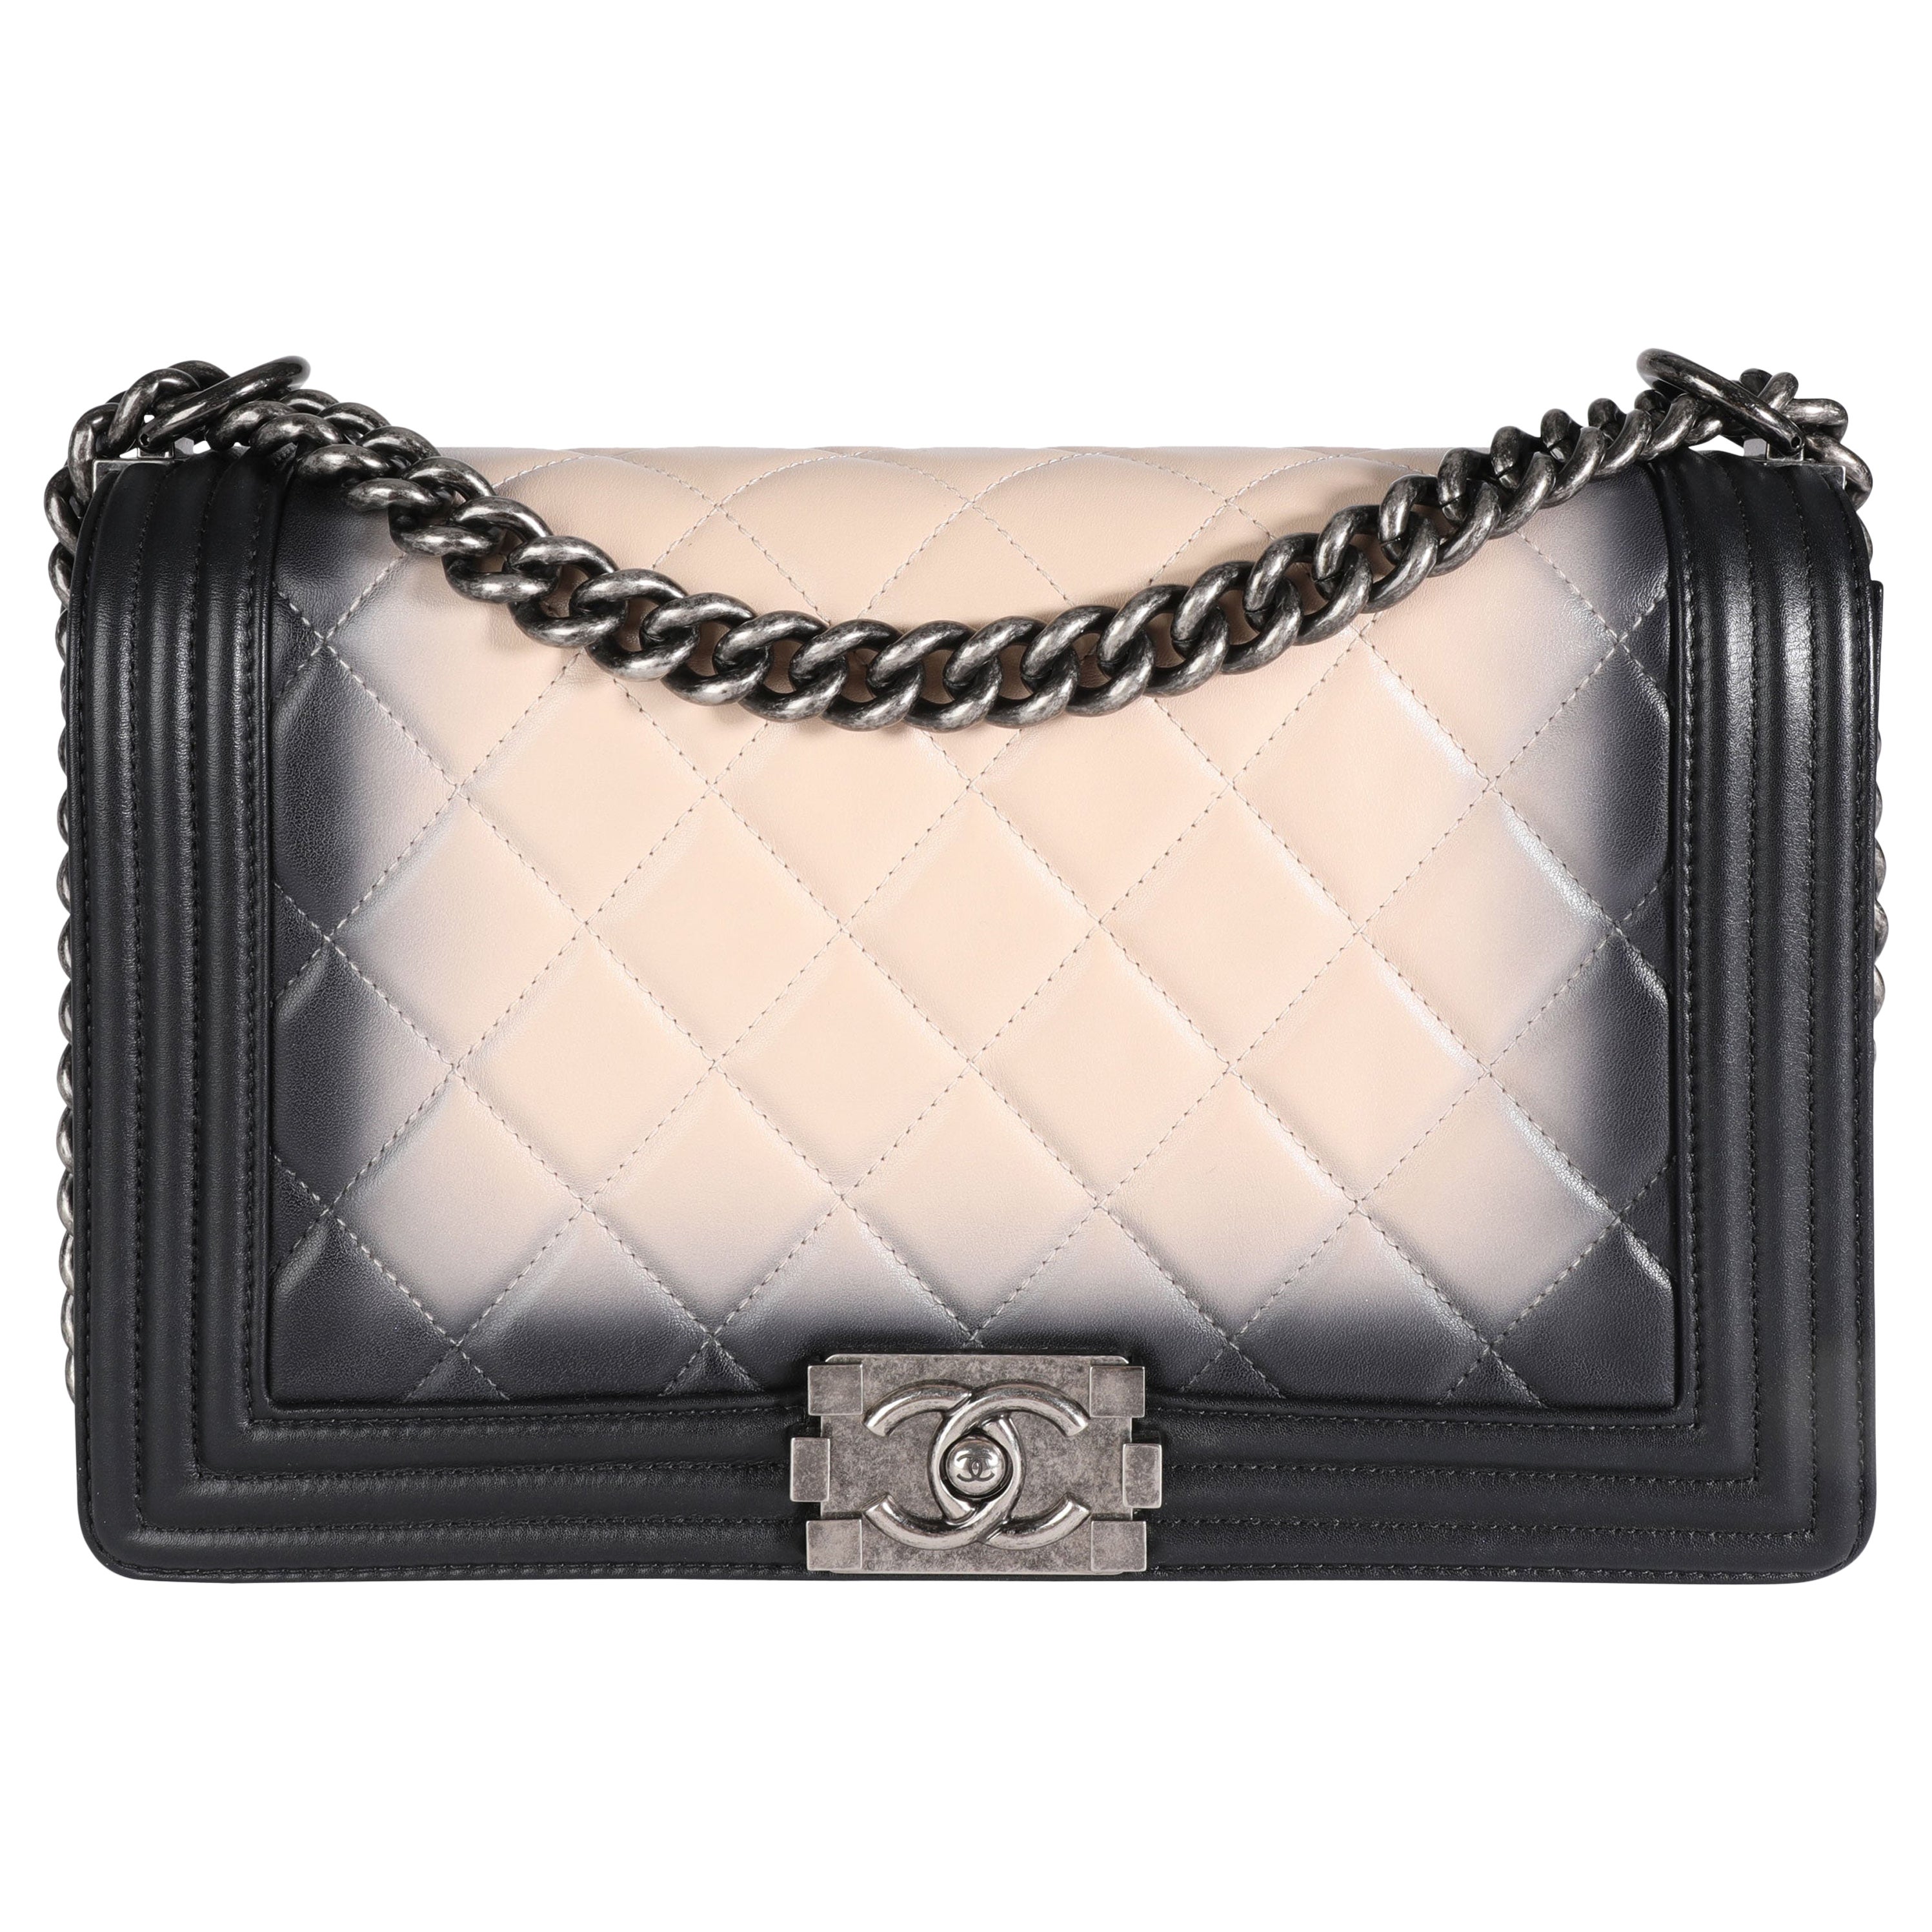 Chanel Black & Beige Ombré Quilted Leather Boy Bag